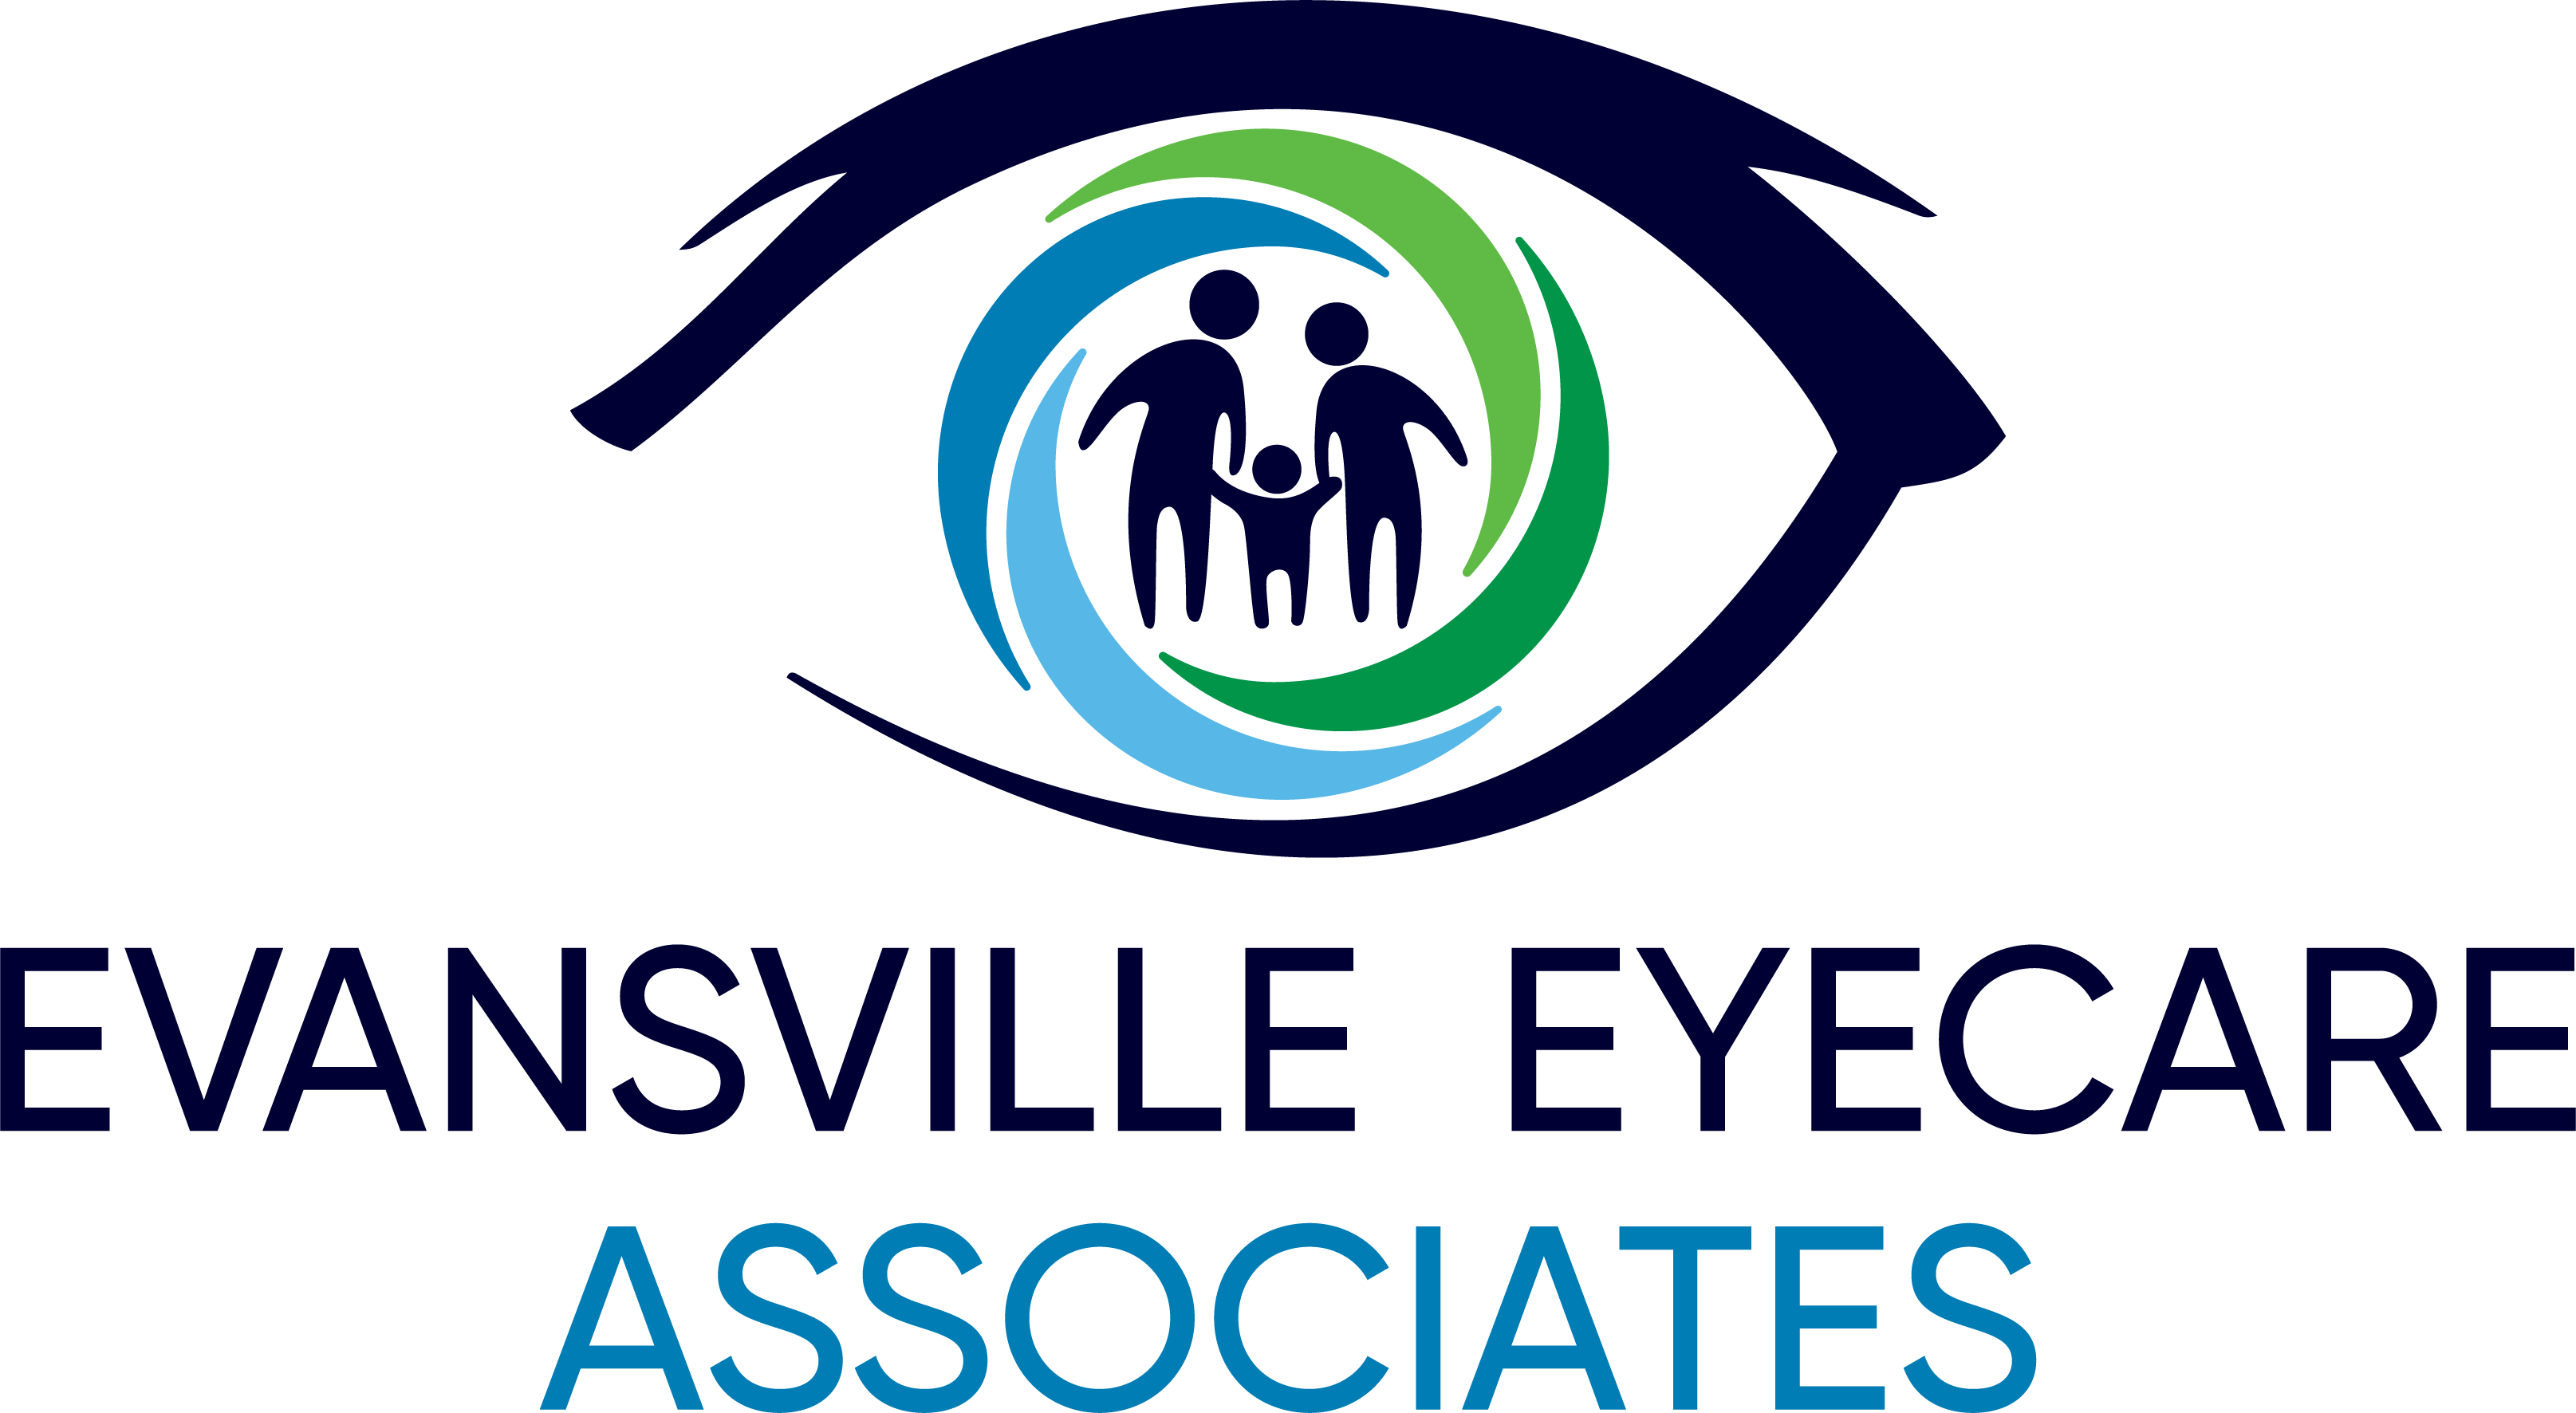 Evansville Eye Care Associates